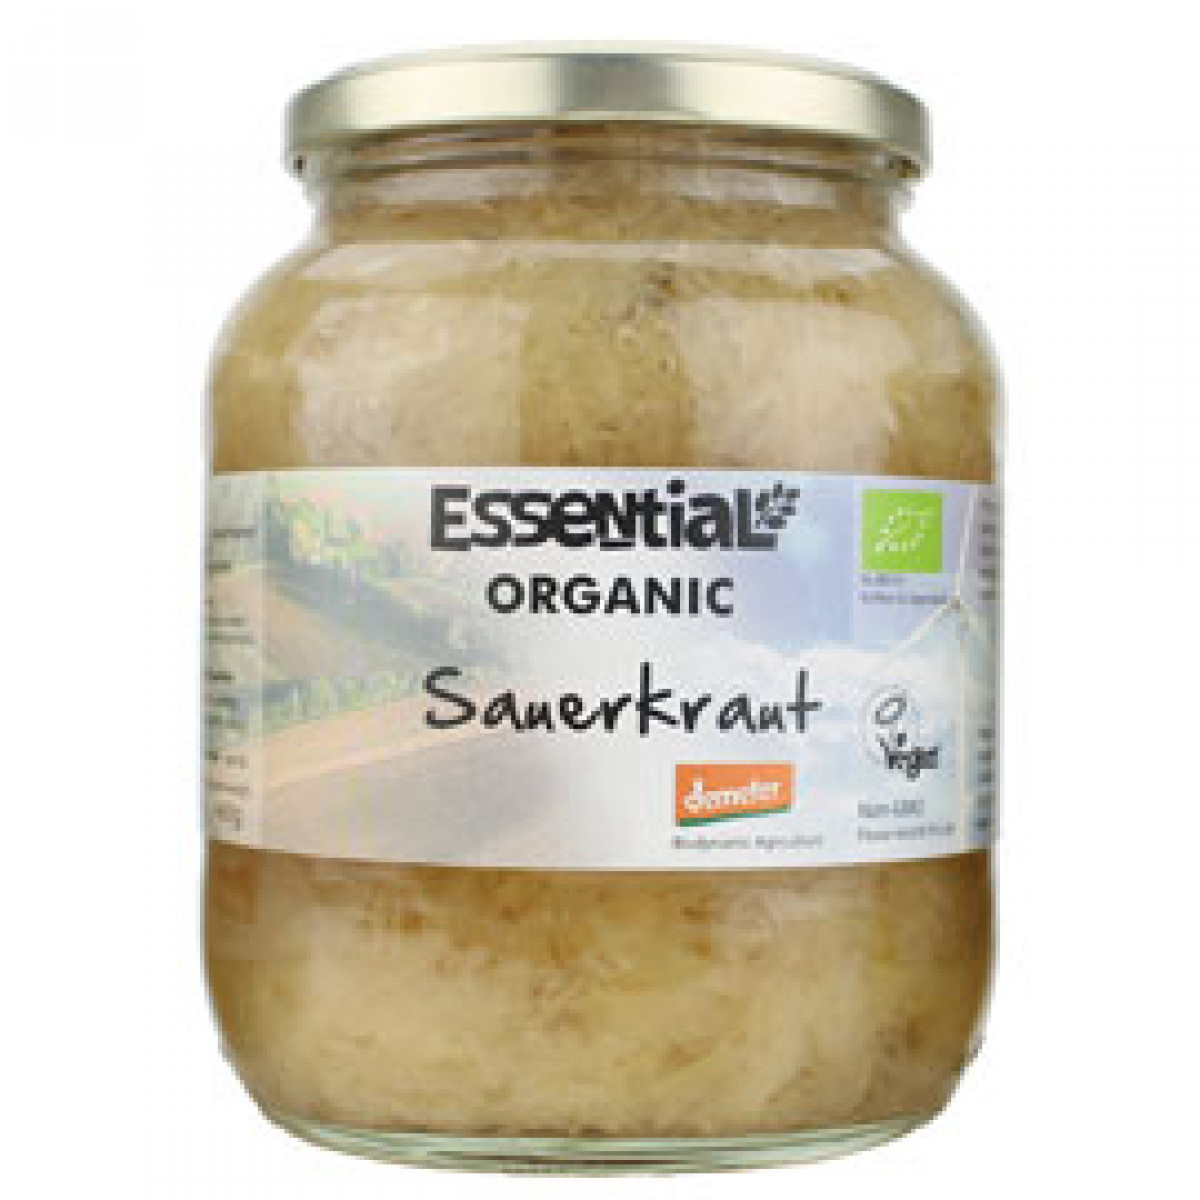 Product picture for Sauerkraut - Glass Jar